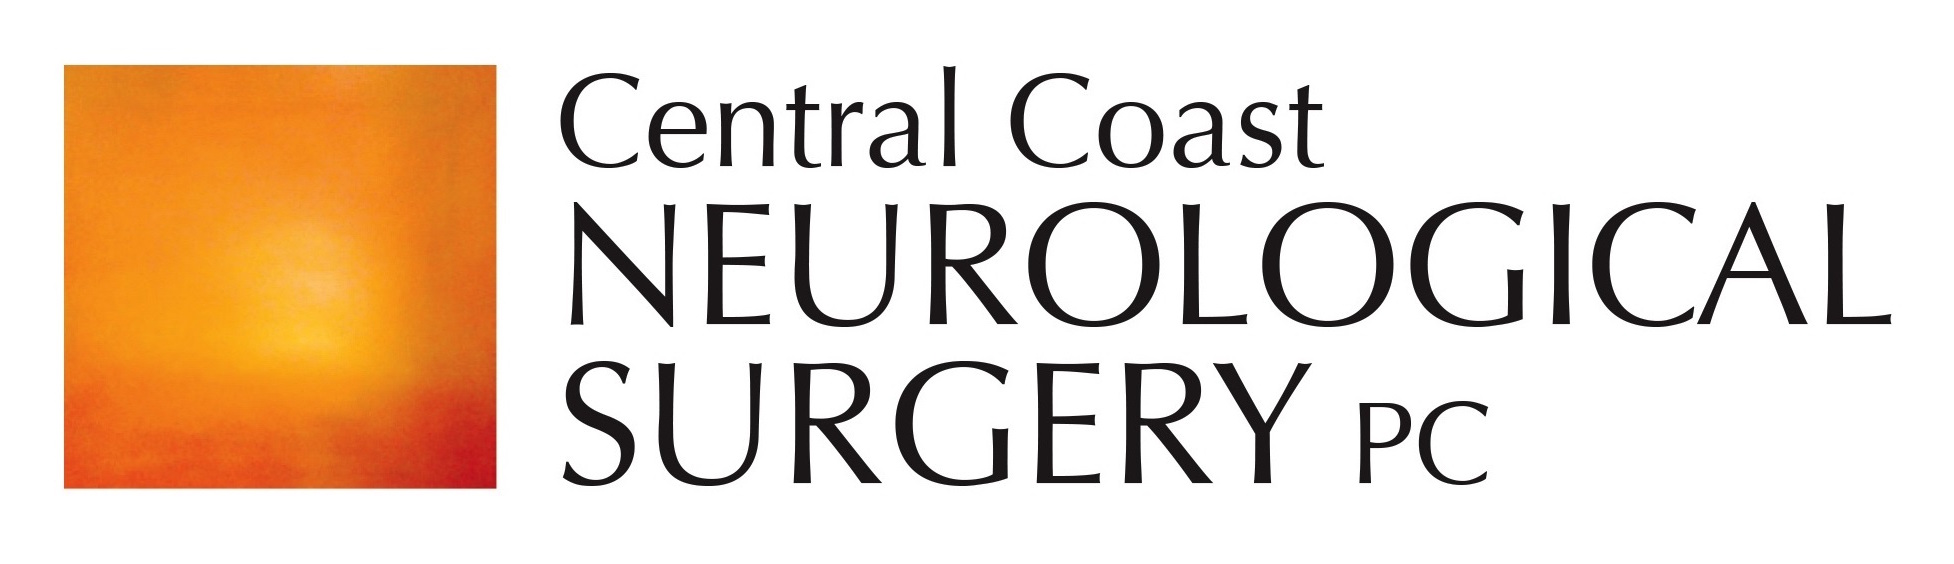 Central Coast Neurological Surgery PC